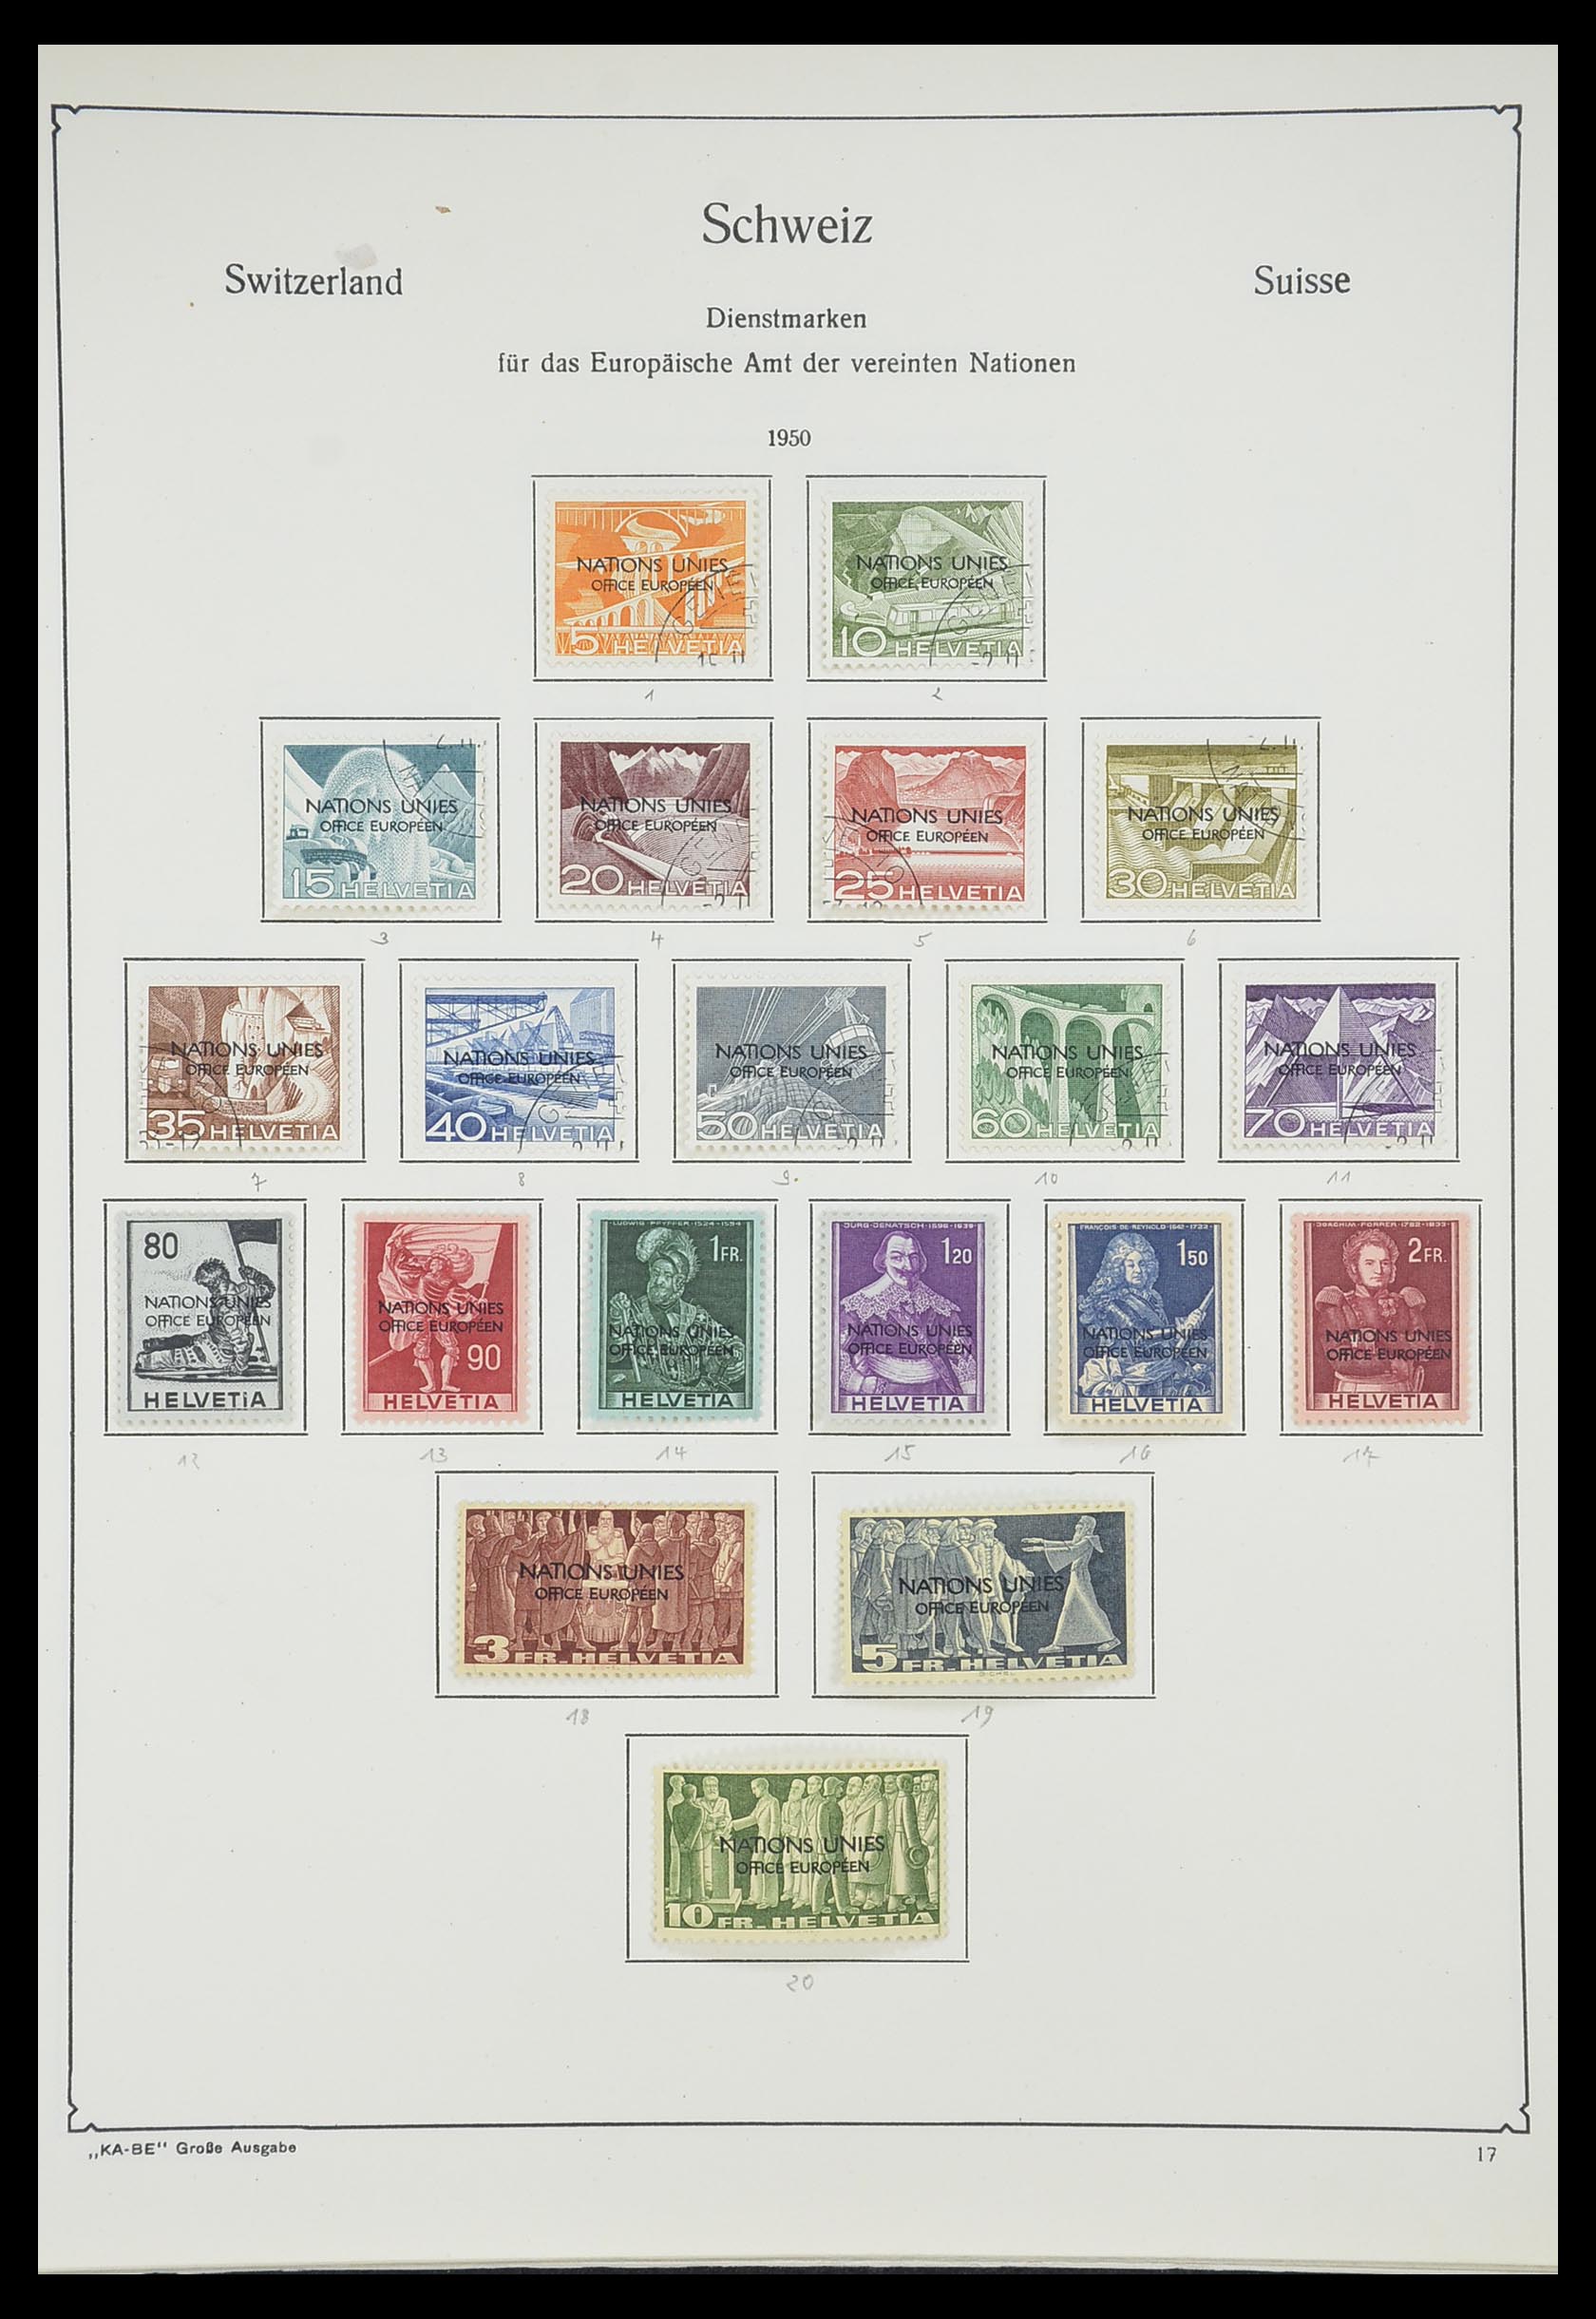 33327 018 - Stamp collection 33327 Switzerland service 1922-1989.